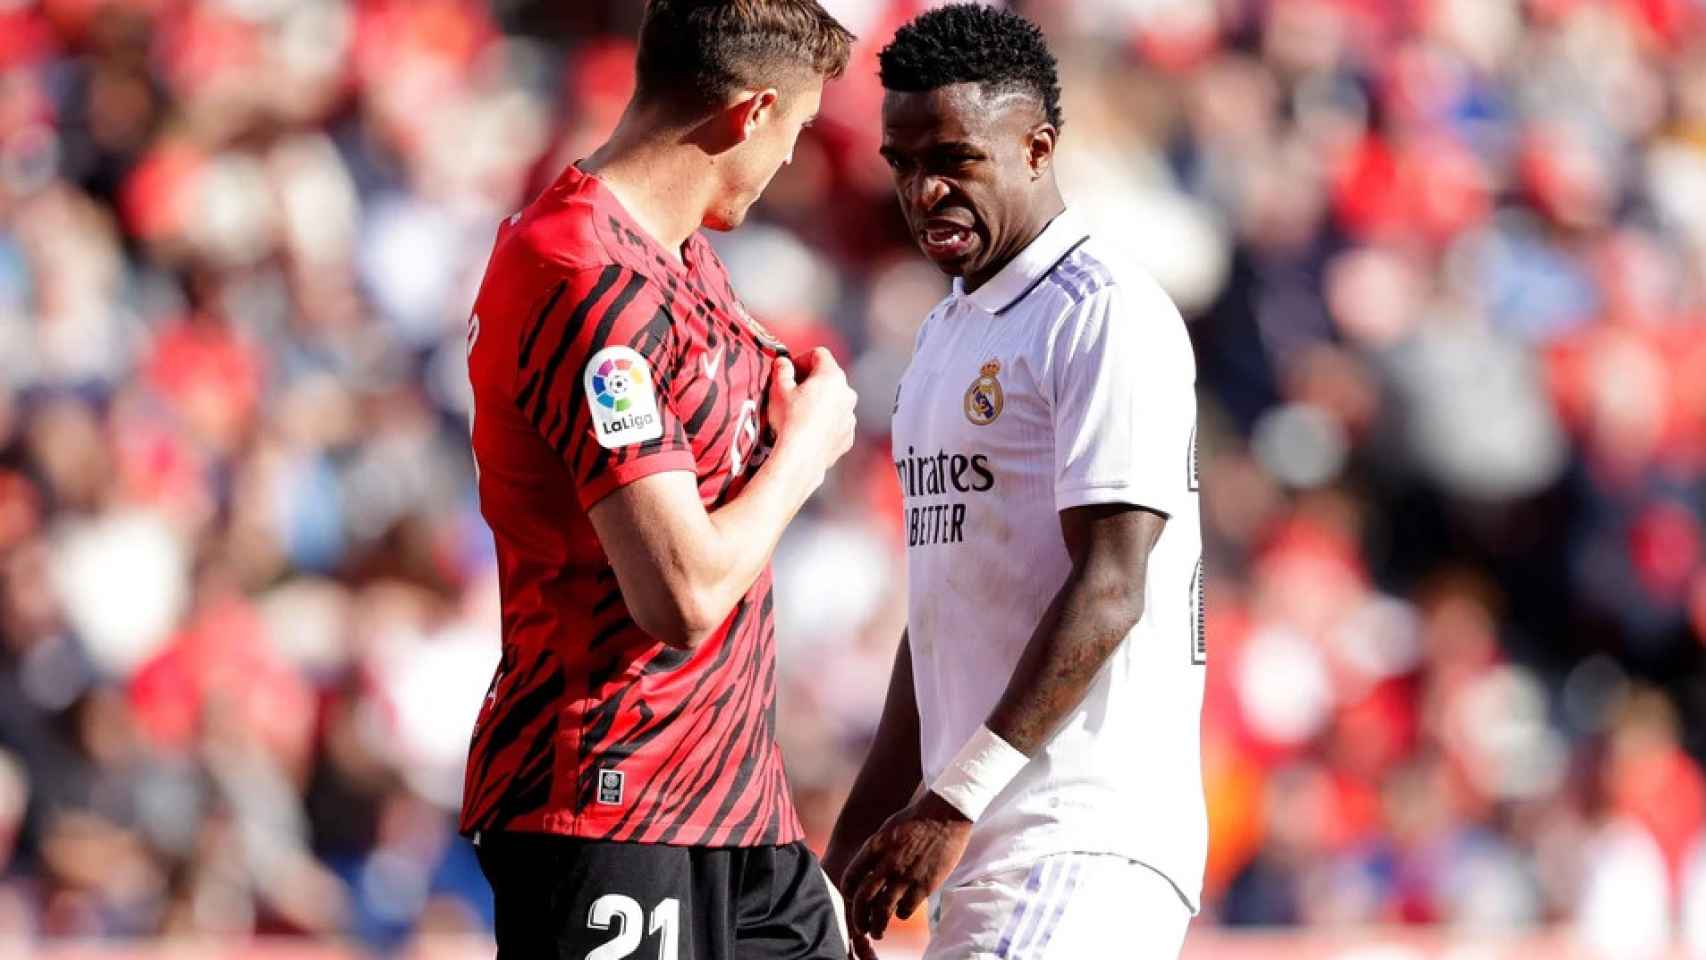 Raíllo provoca a Vinicius intentando que bese el escudo del RCD Mallorca